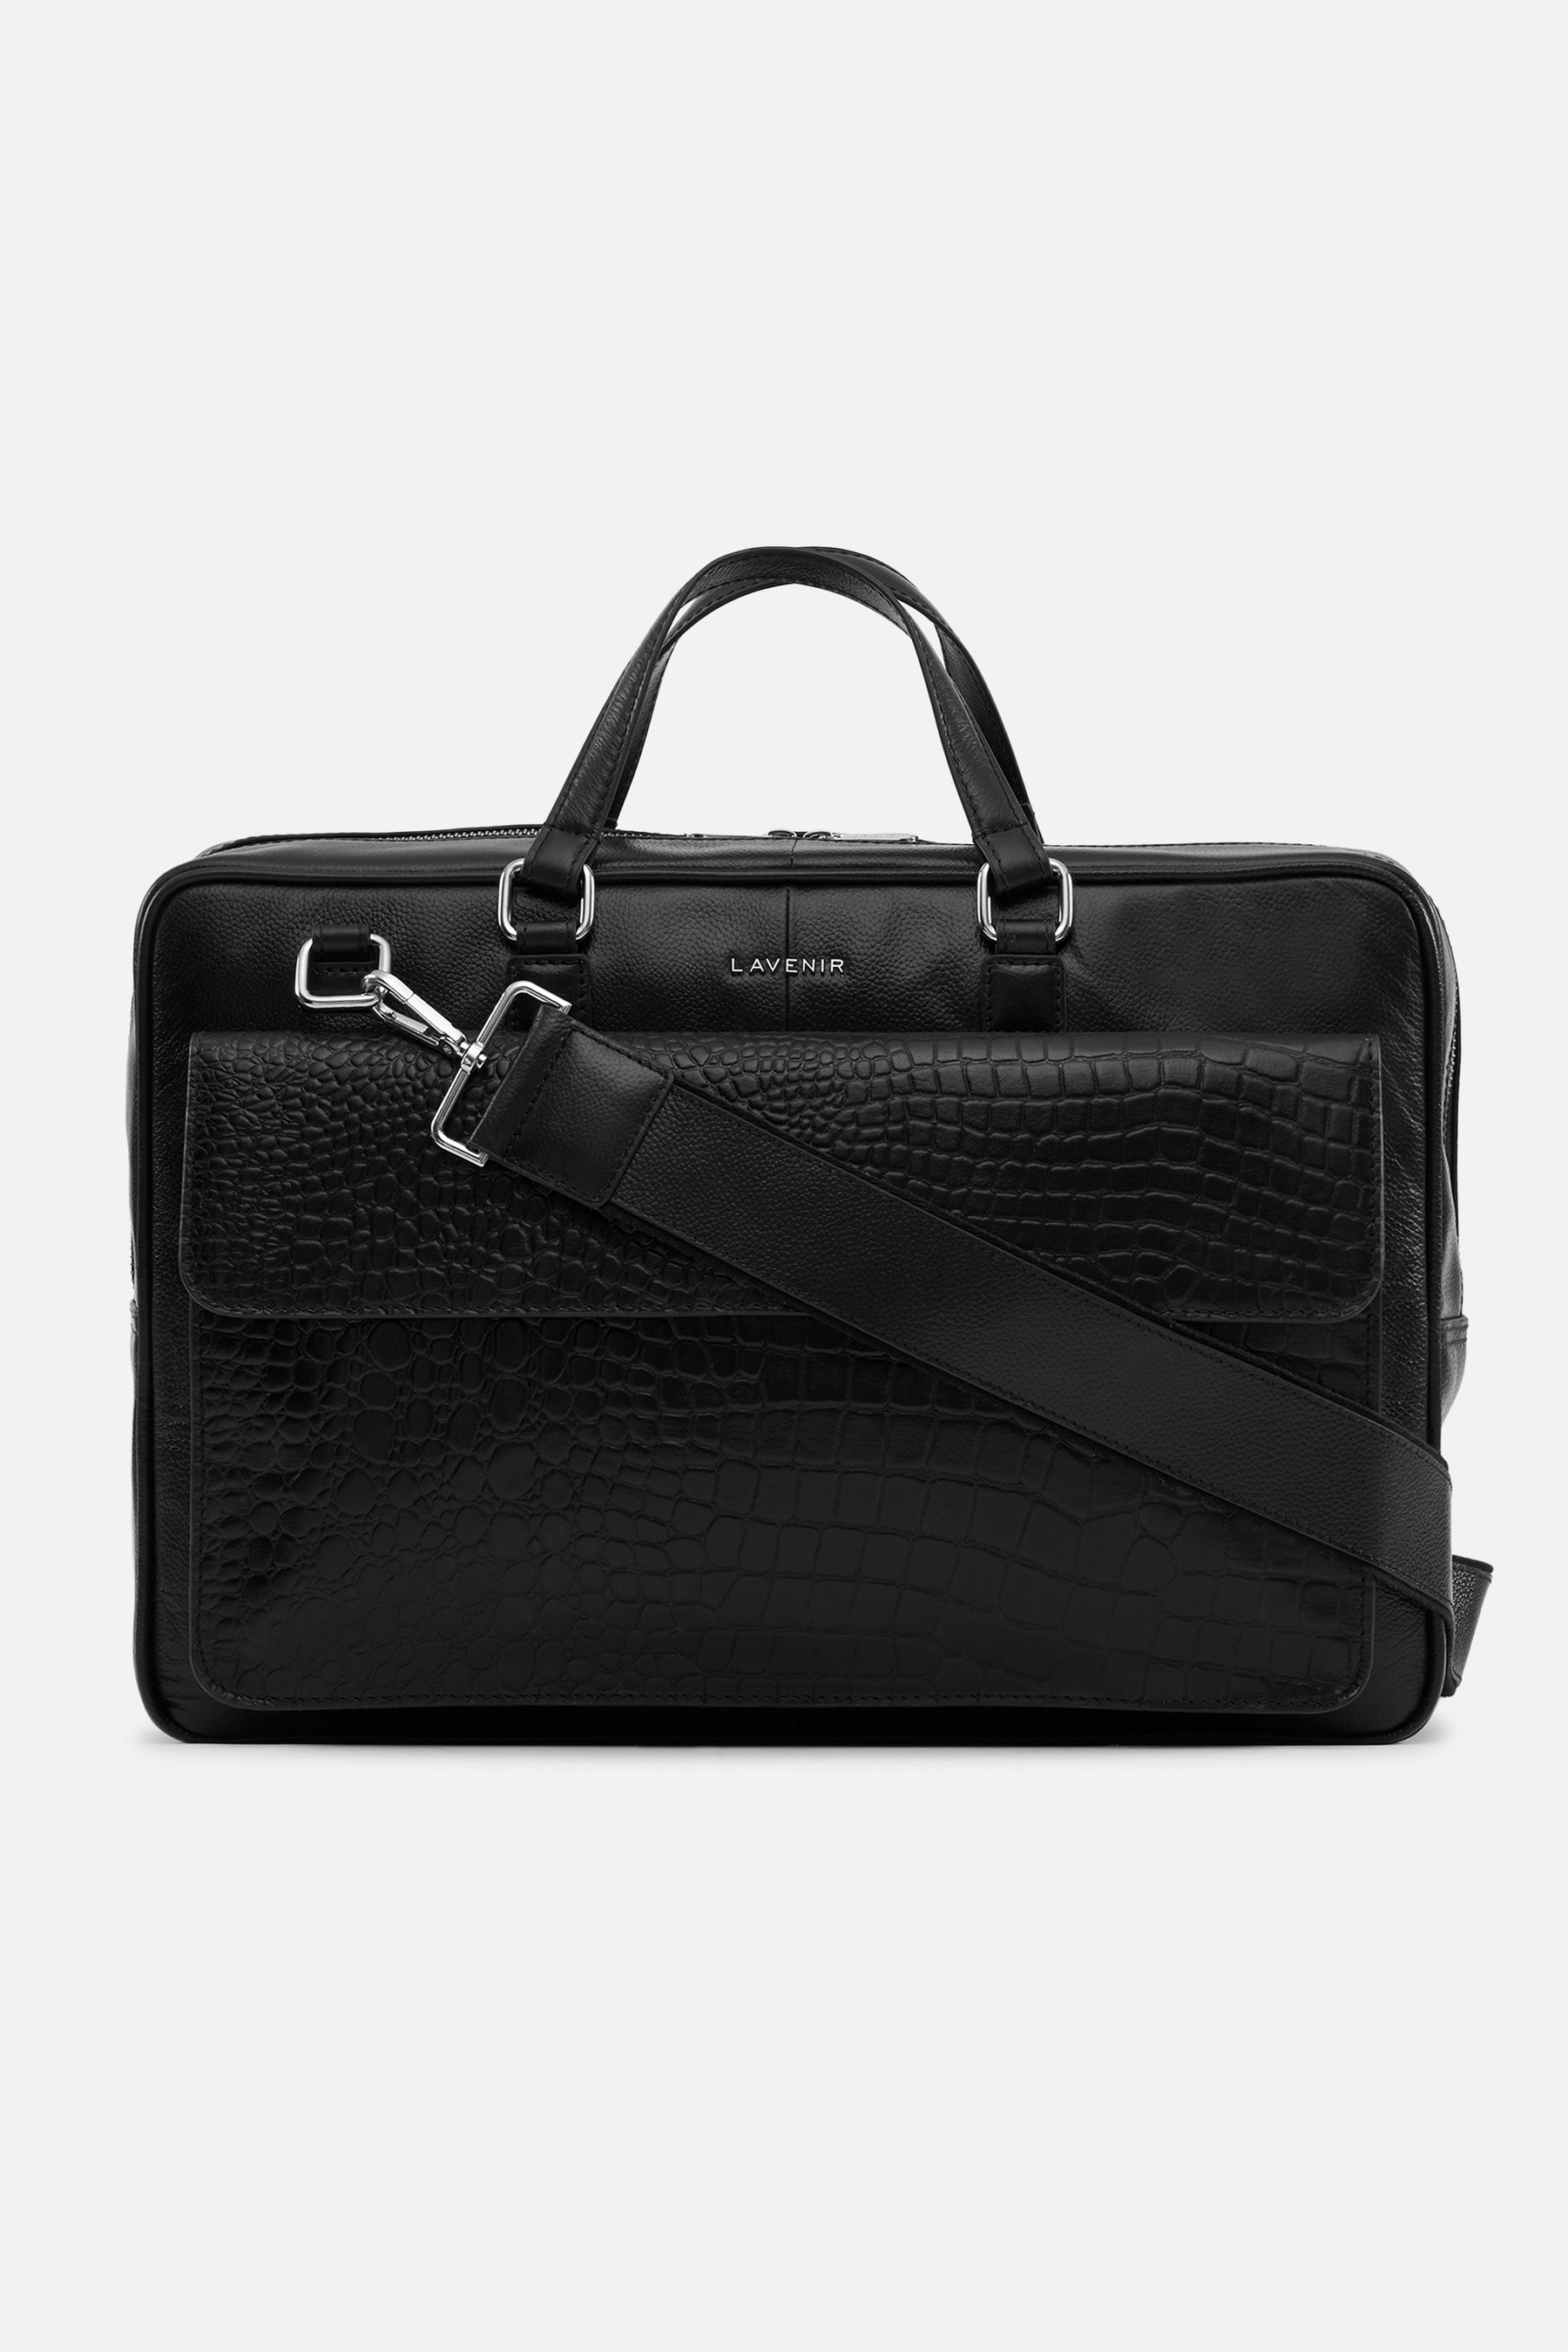 Bronco - Leather Laptop Bag - Black